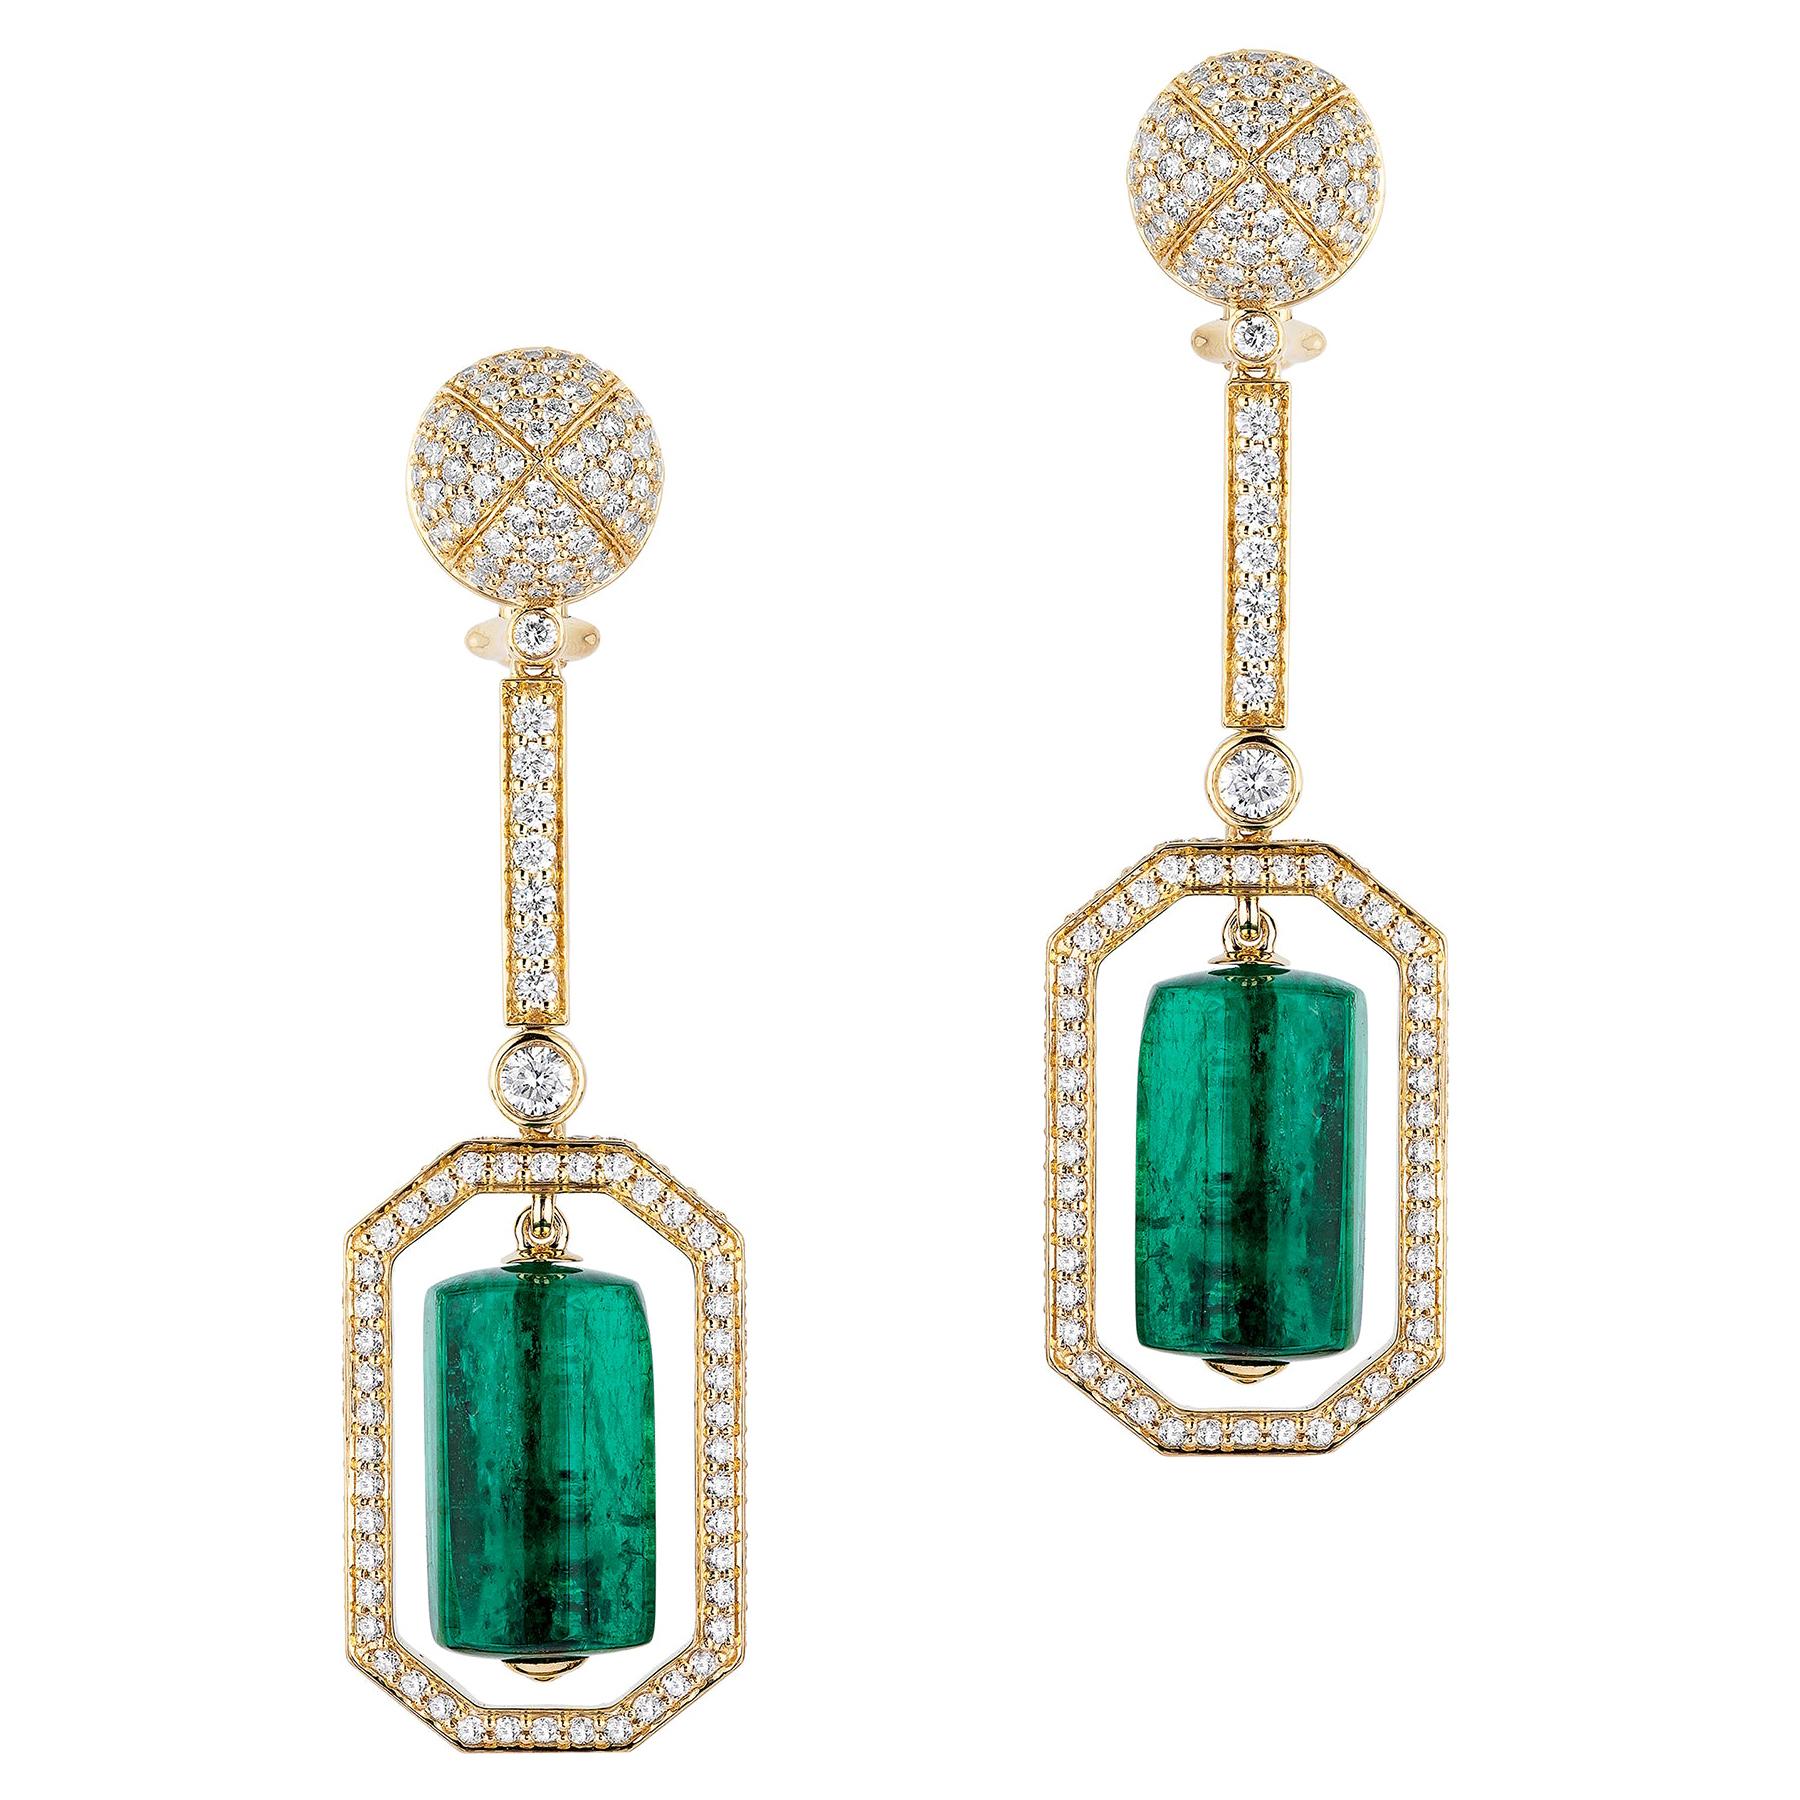  Goshwara Drum Shape Tumbled Emerald And Diamonds Earrings